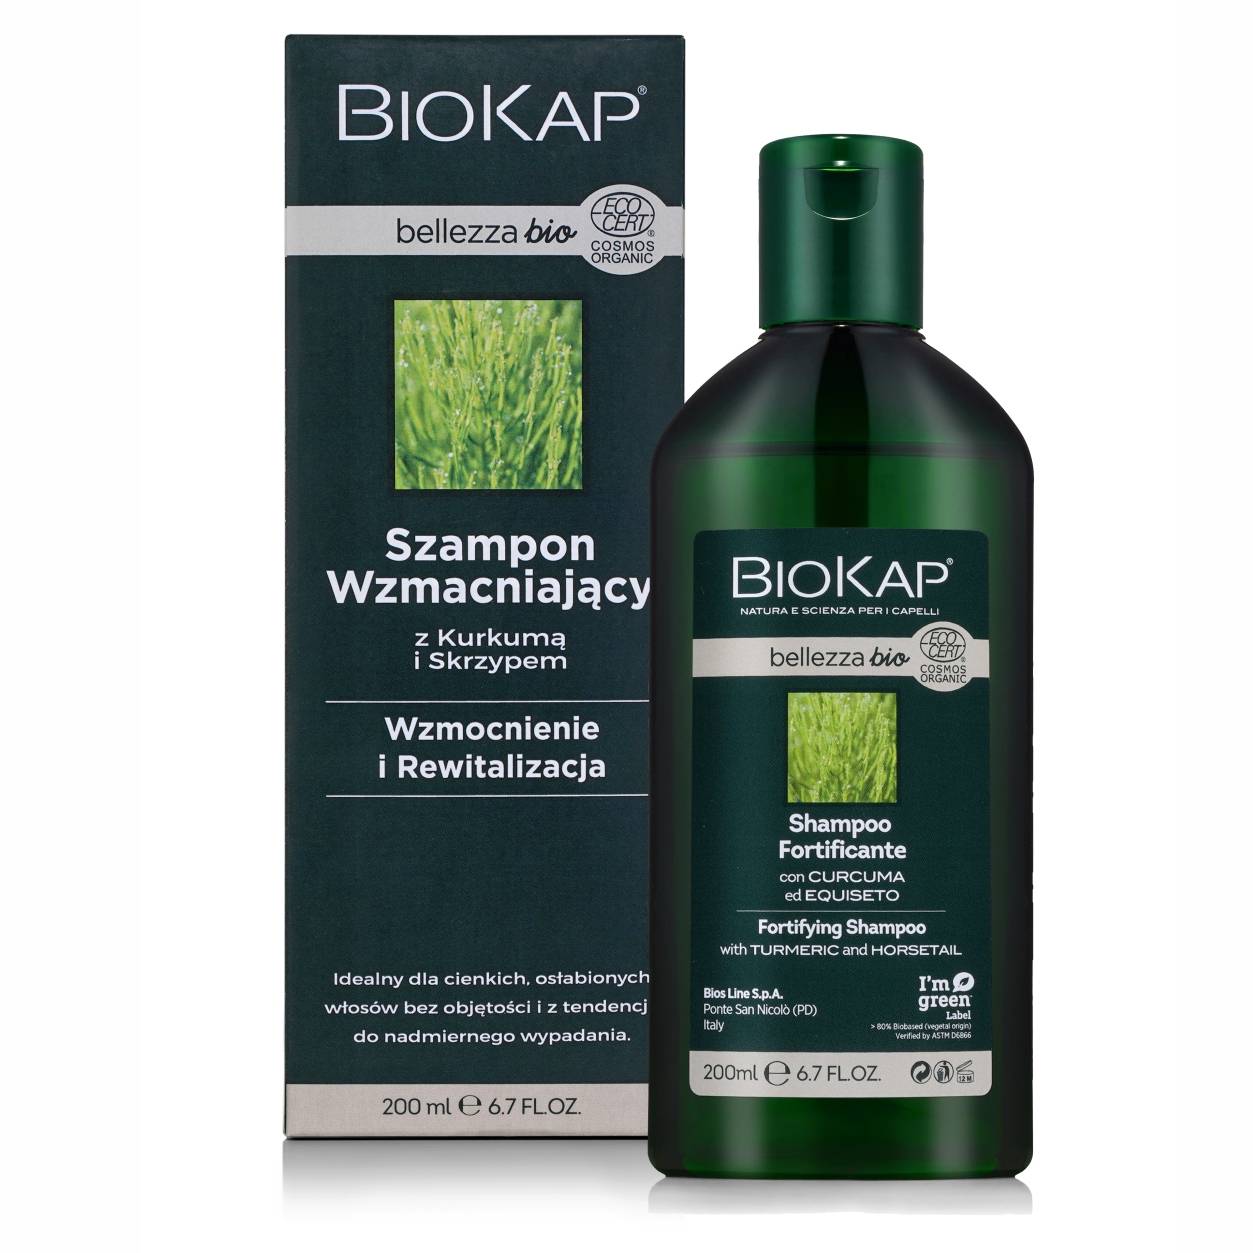 biokap szampon wizaz